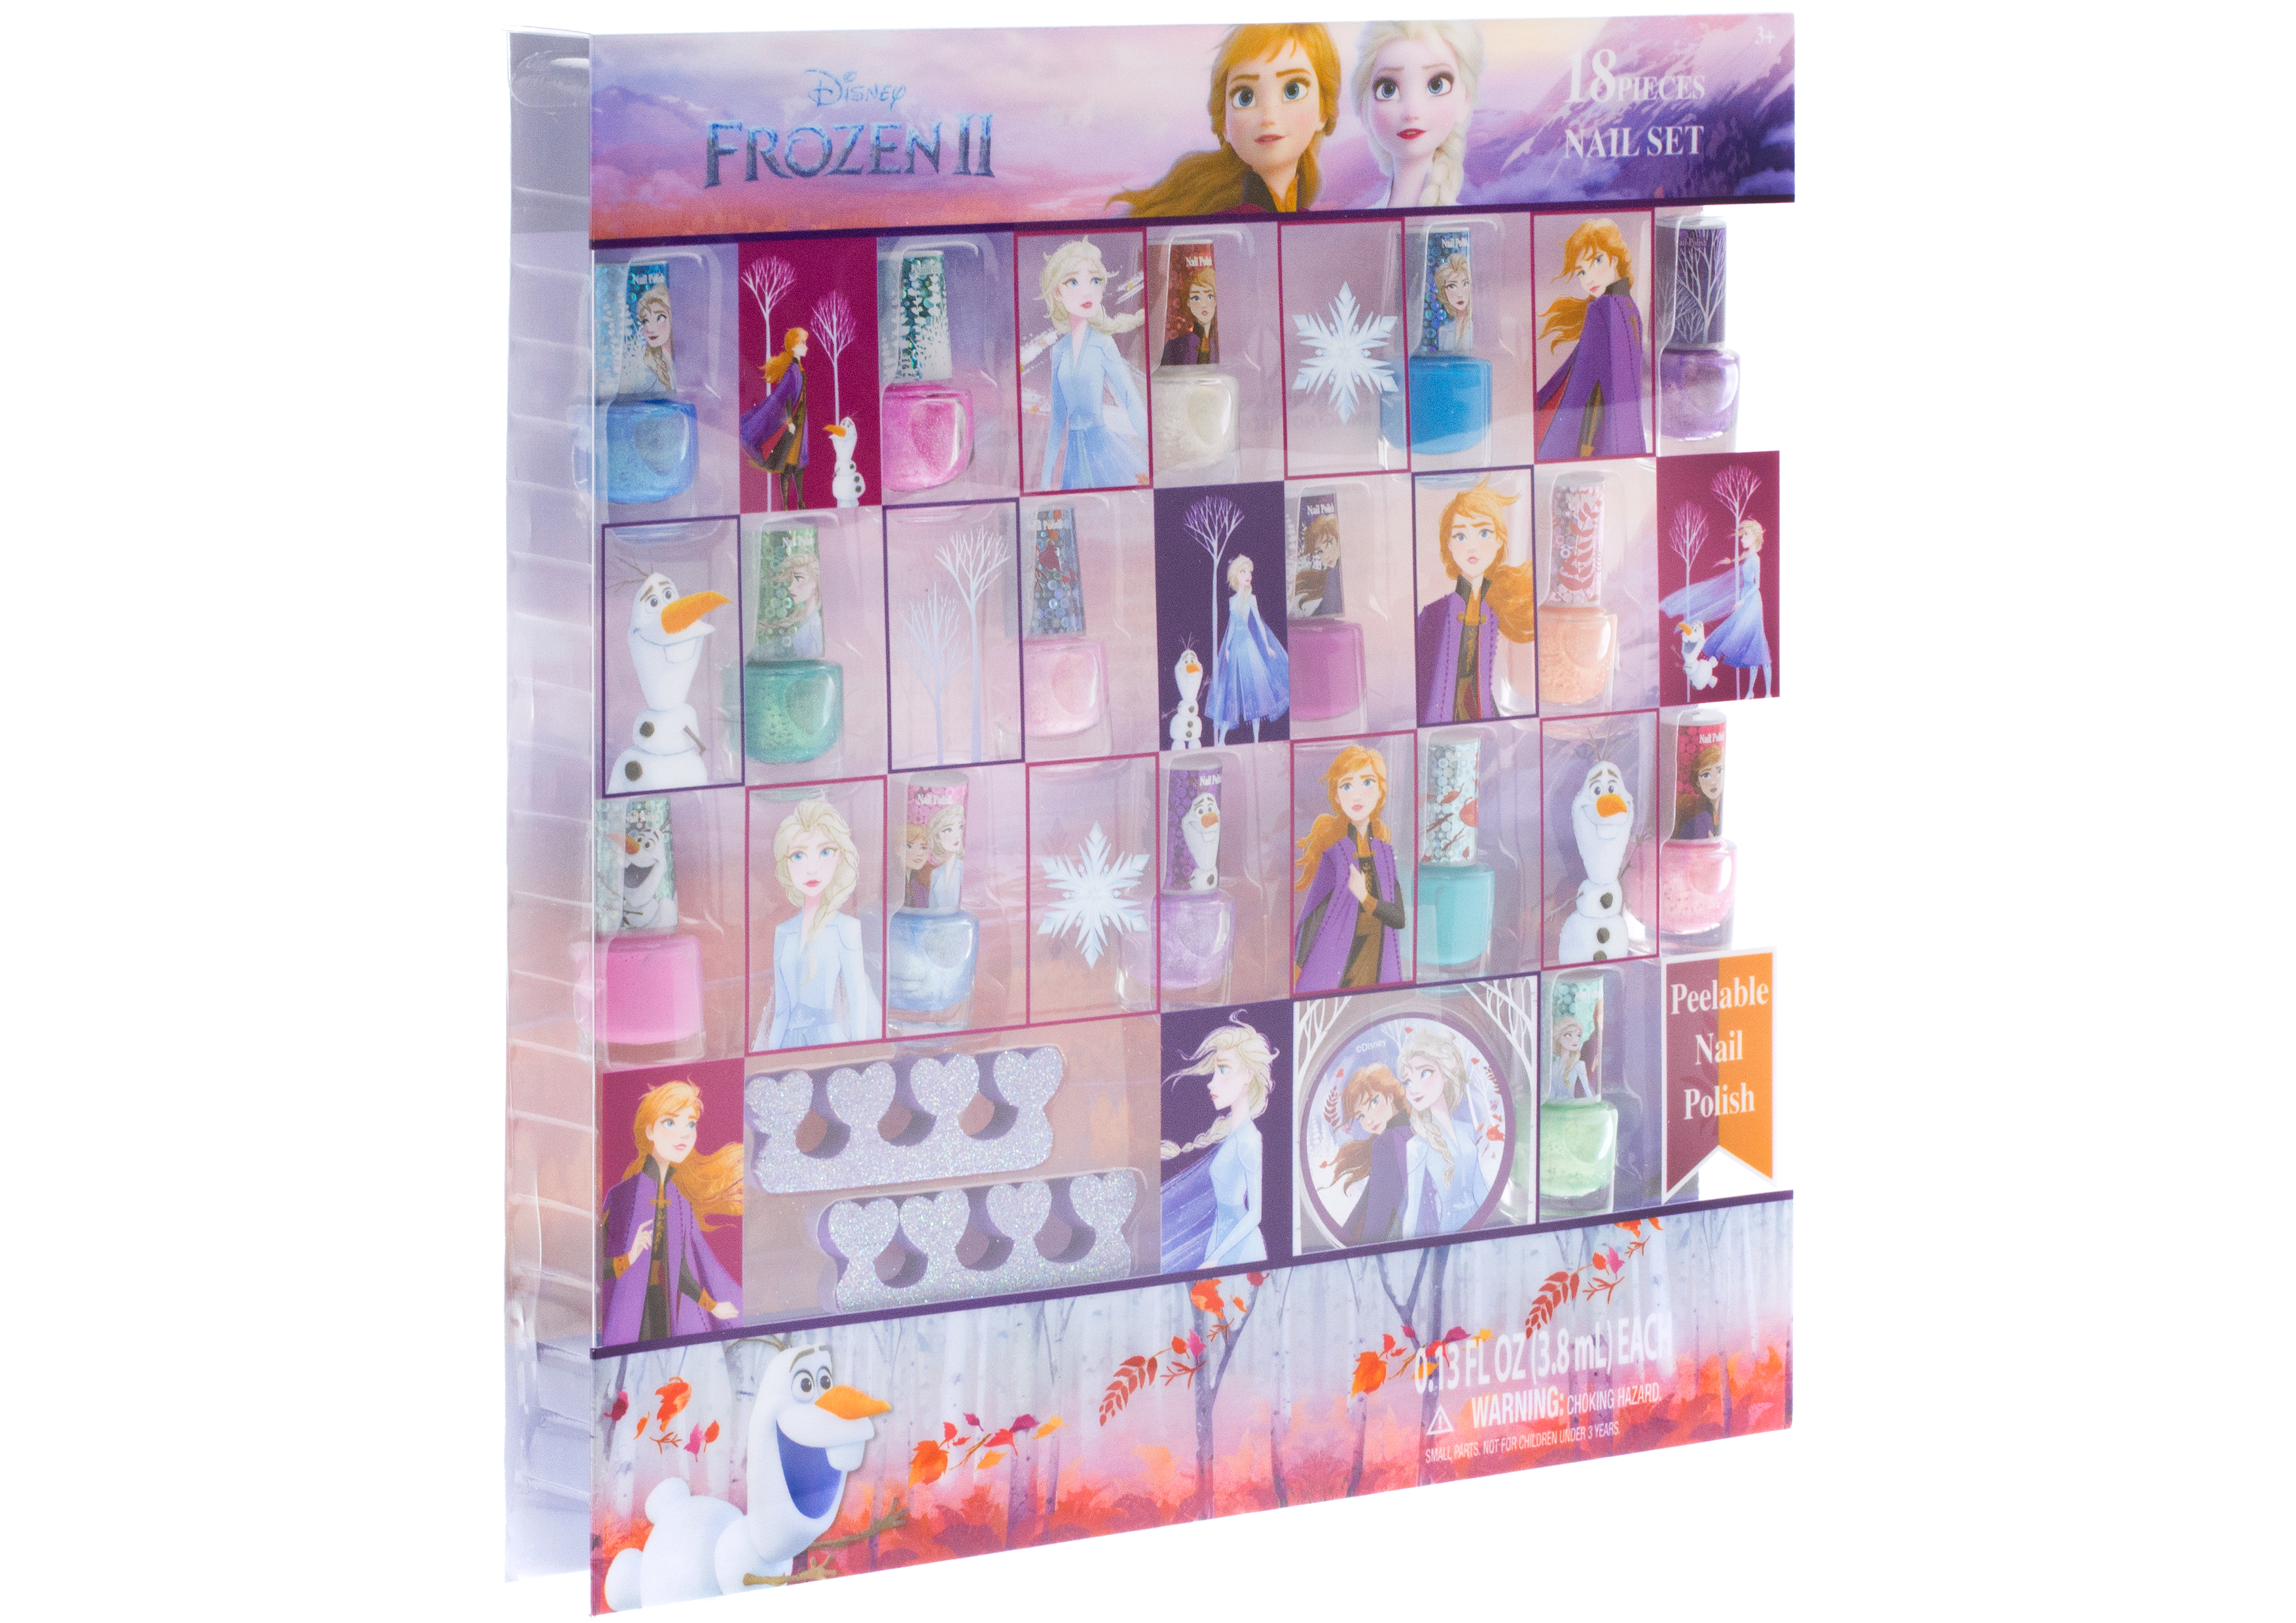 ($15 value) Disney Frozen II Nail Polish Gift Set Sparkle, Peel-Off, 18 pc - image 5 of 10